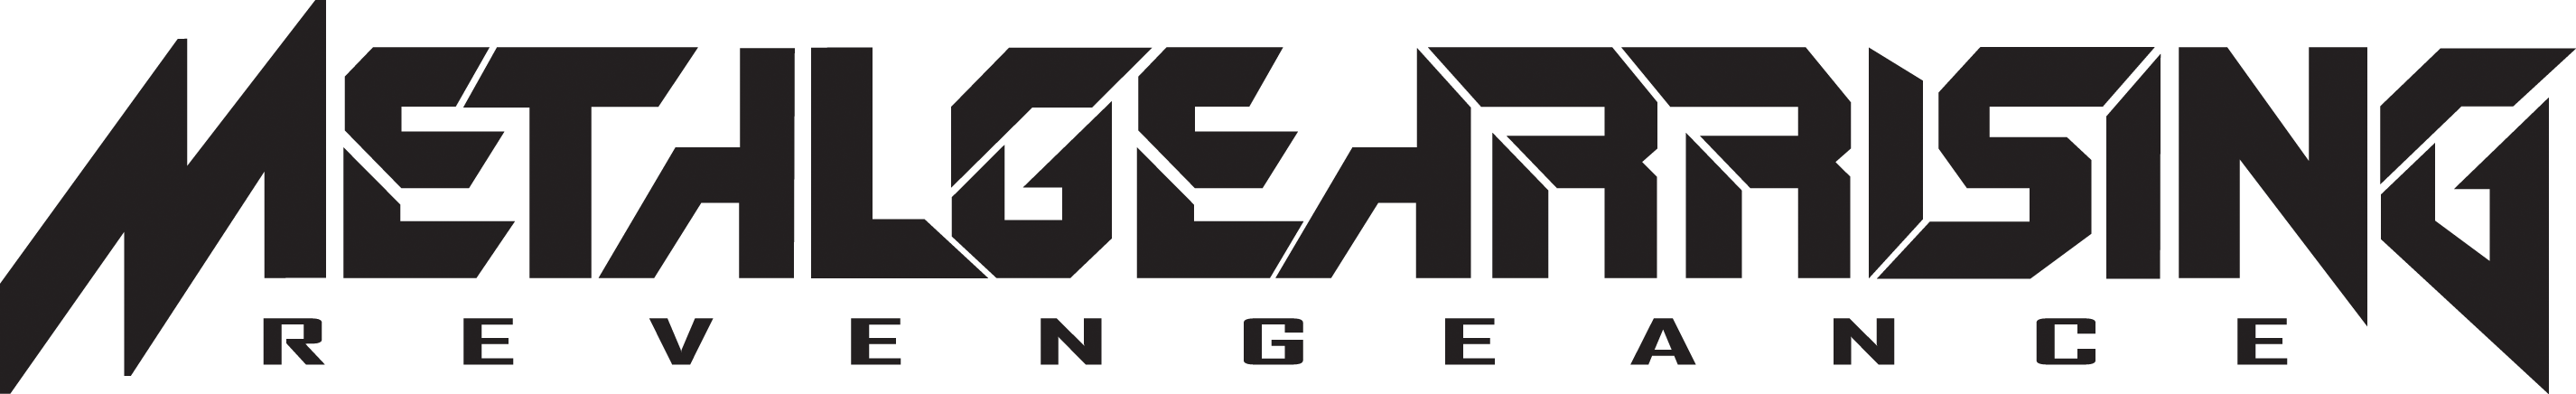 Metal Gear Rising: Revengeance - SteamGridDB